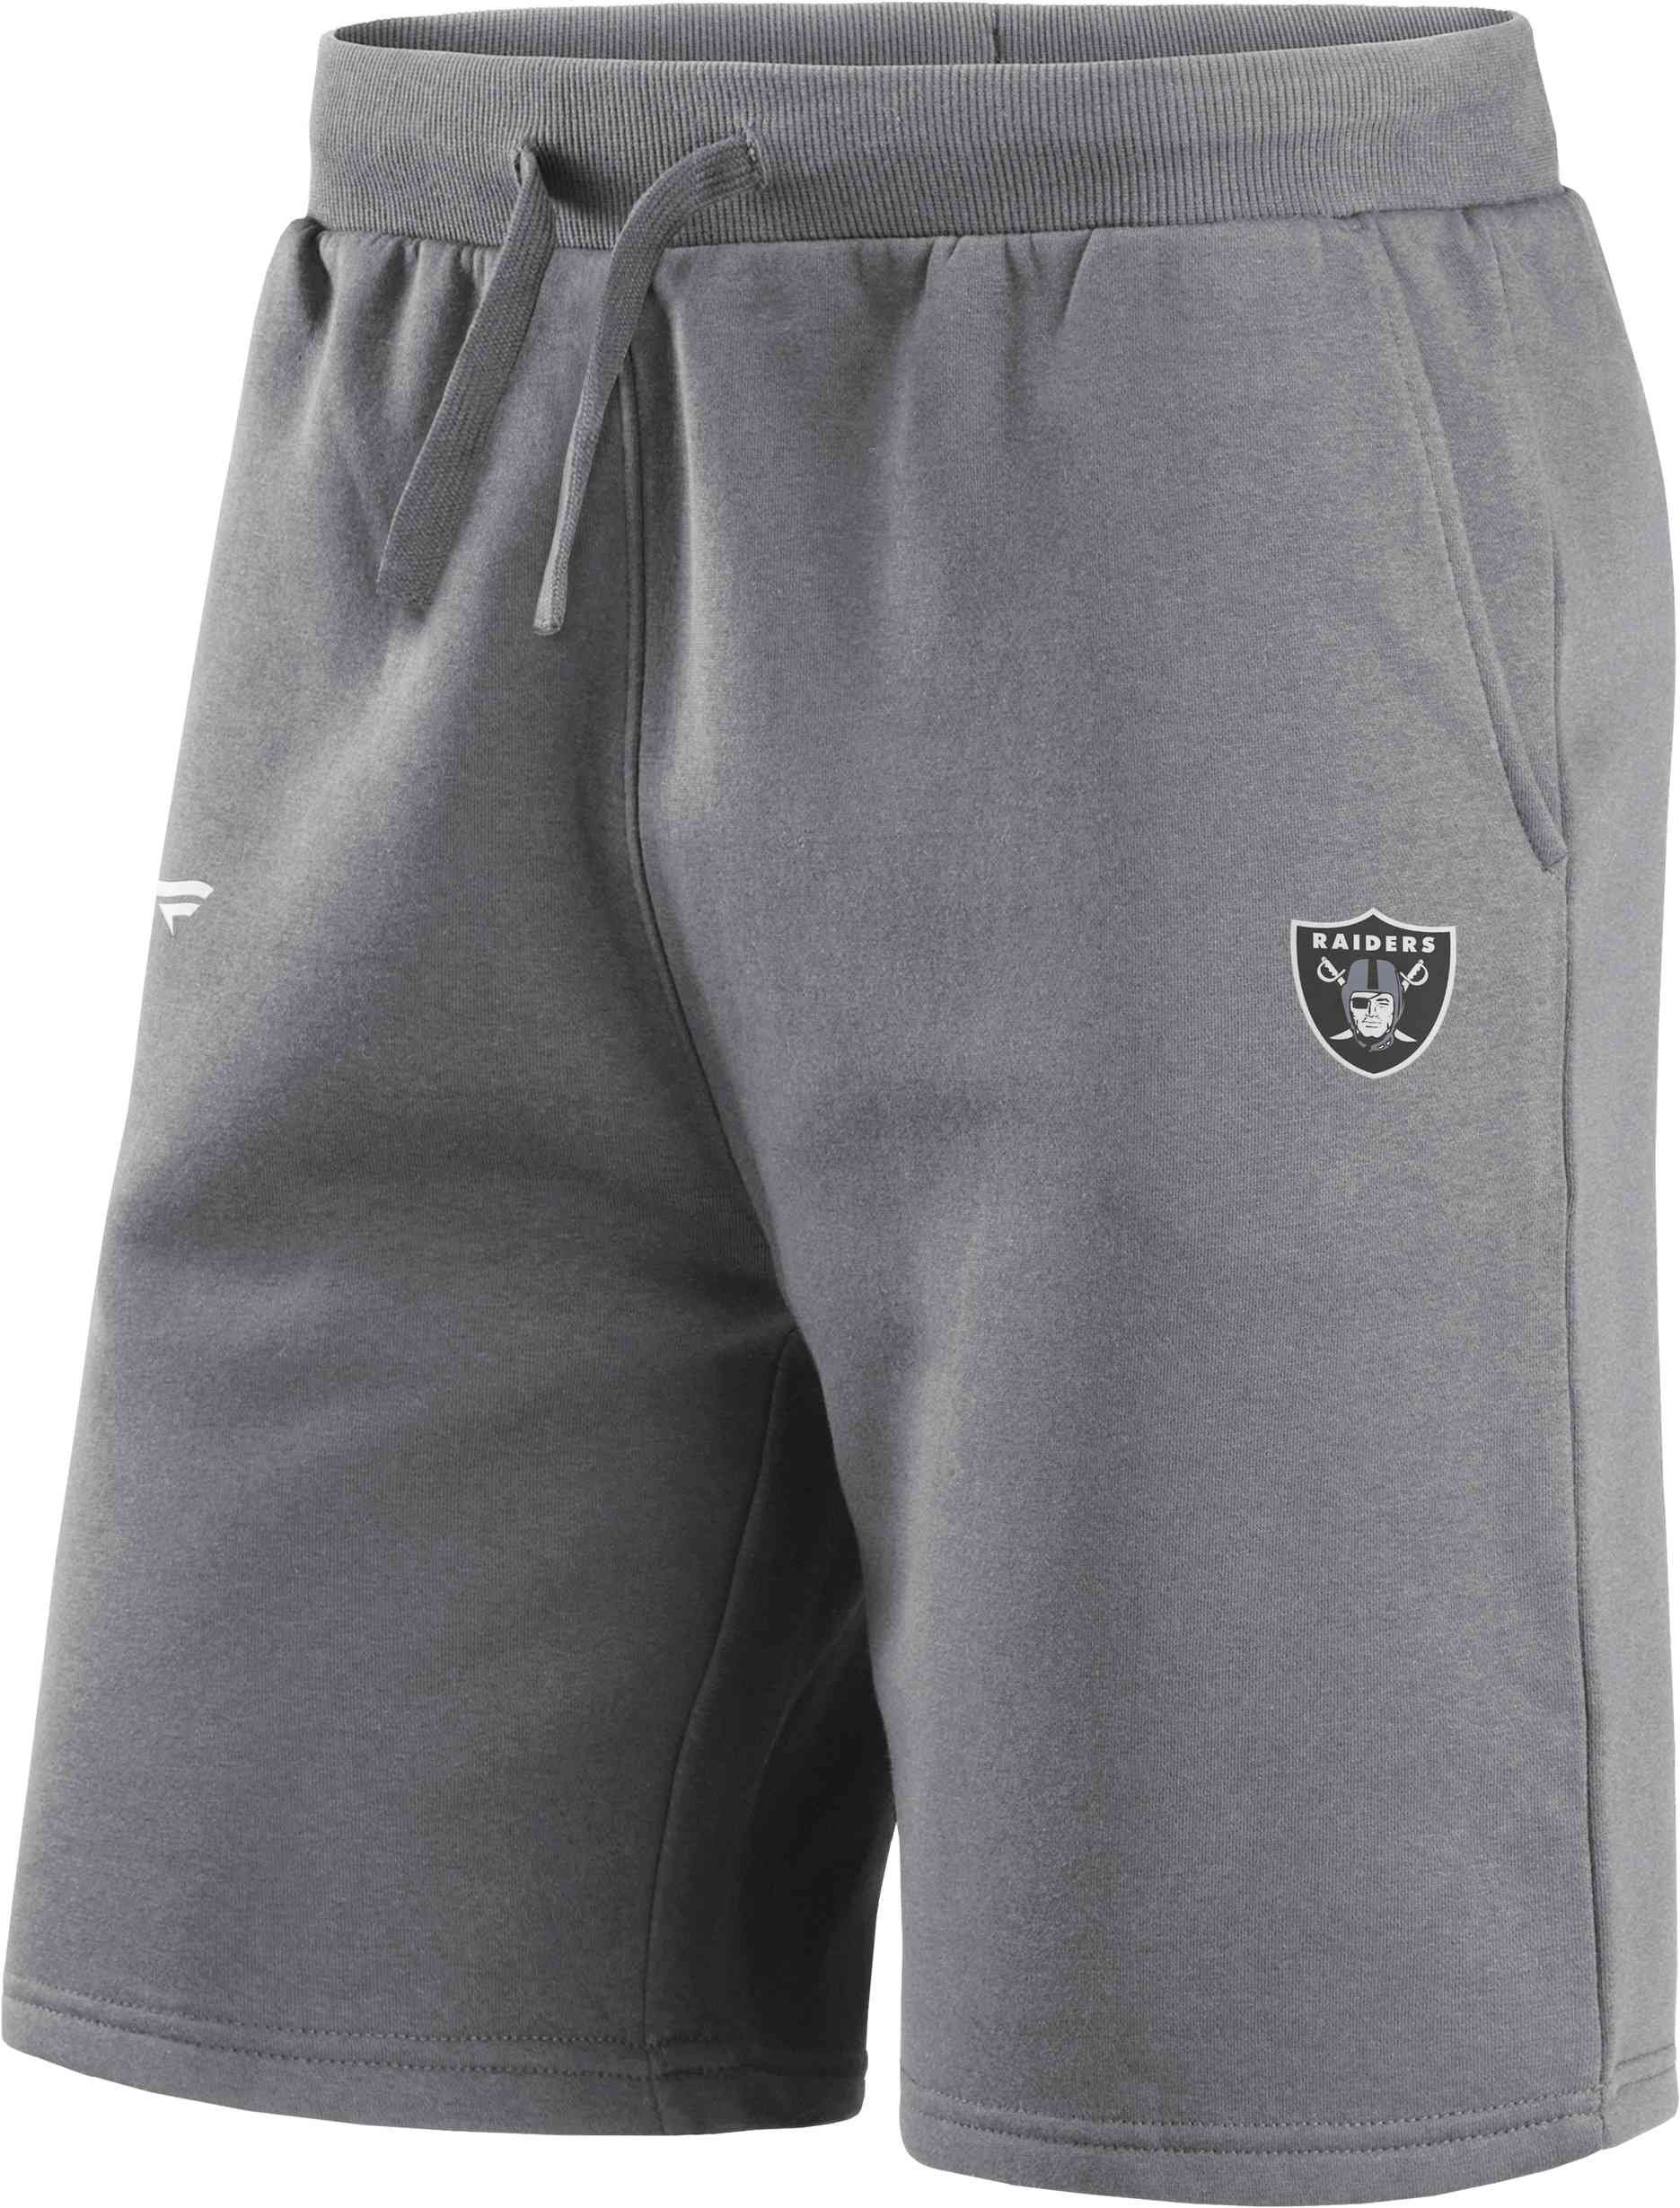 Las Raiders NFL Fleece Fanatics Logo Shorts Primary Vegas